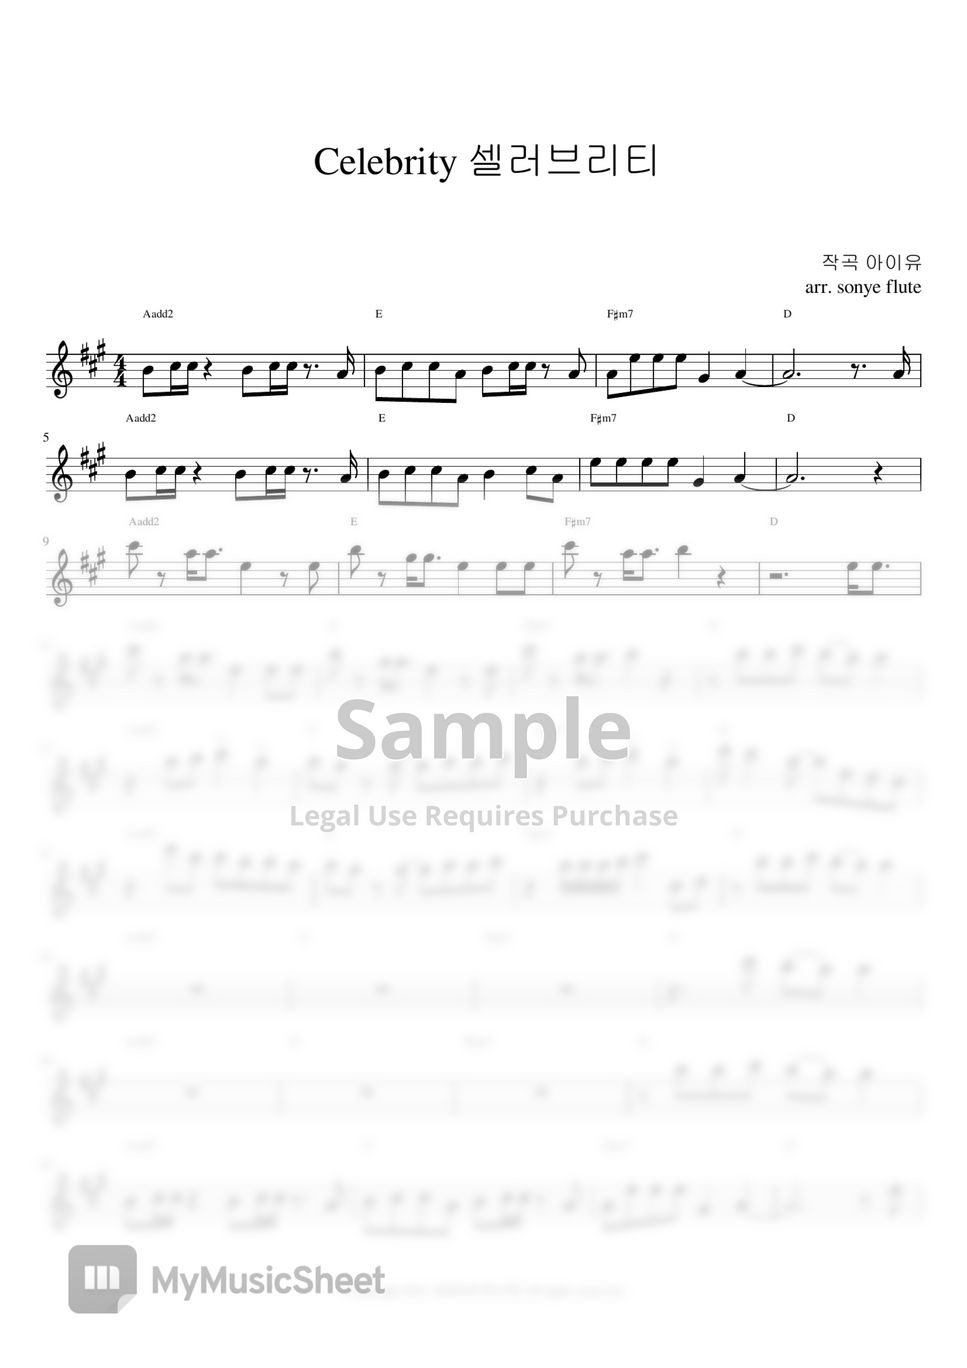 IU 아이유 - Celebrity (Flute Sheet Music) by sonye flute